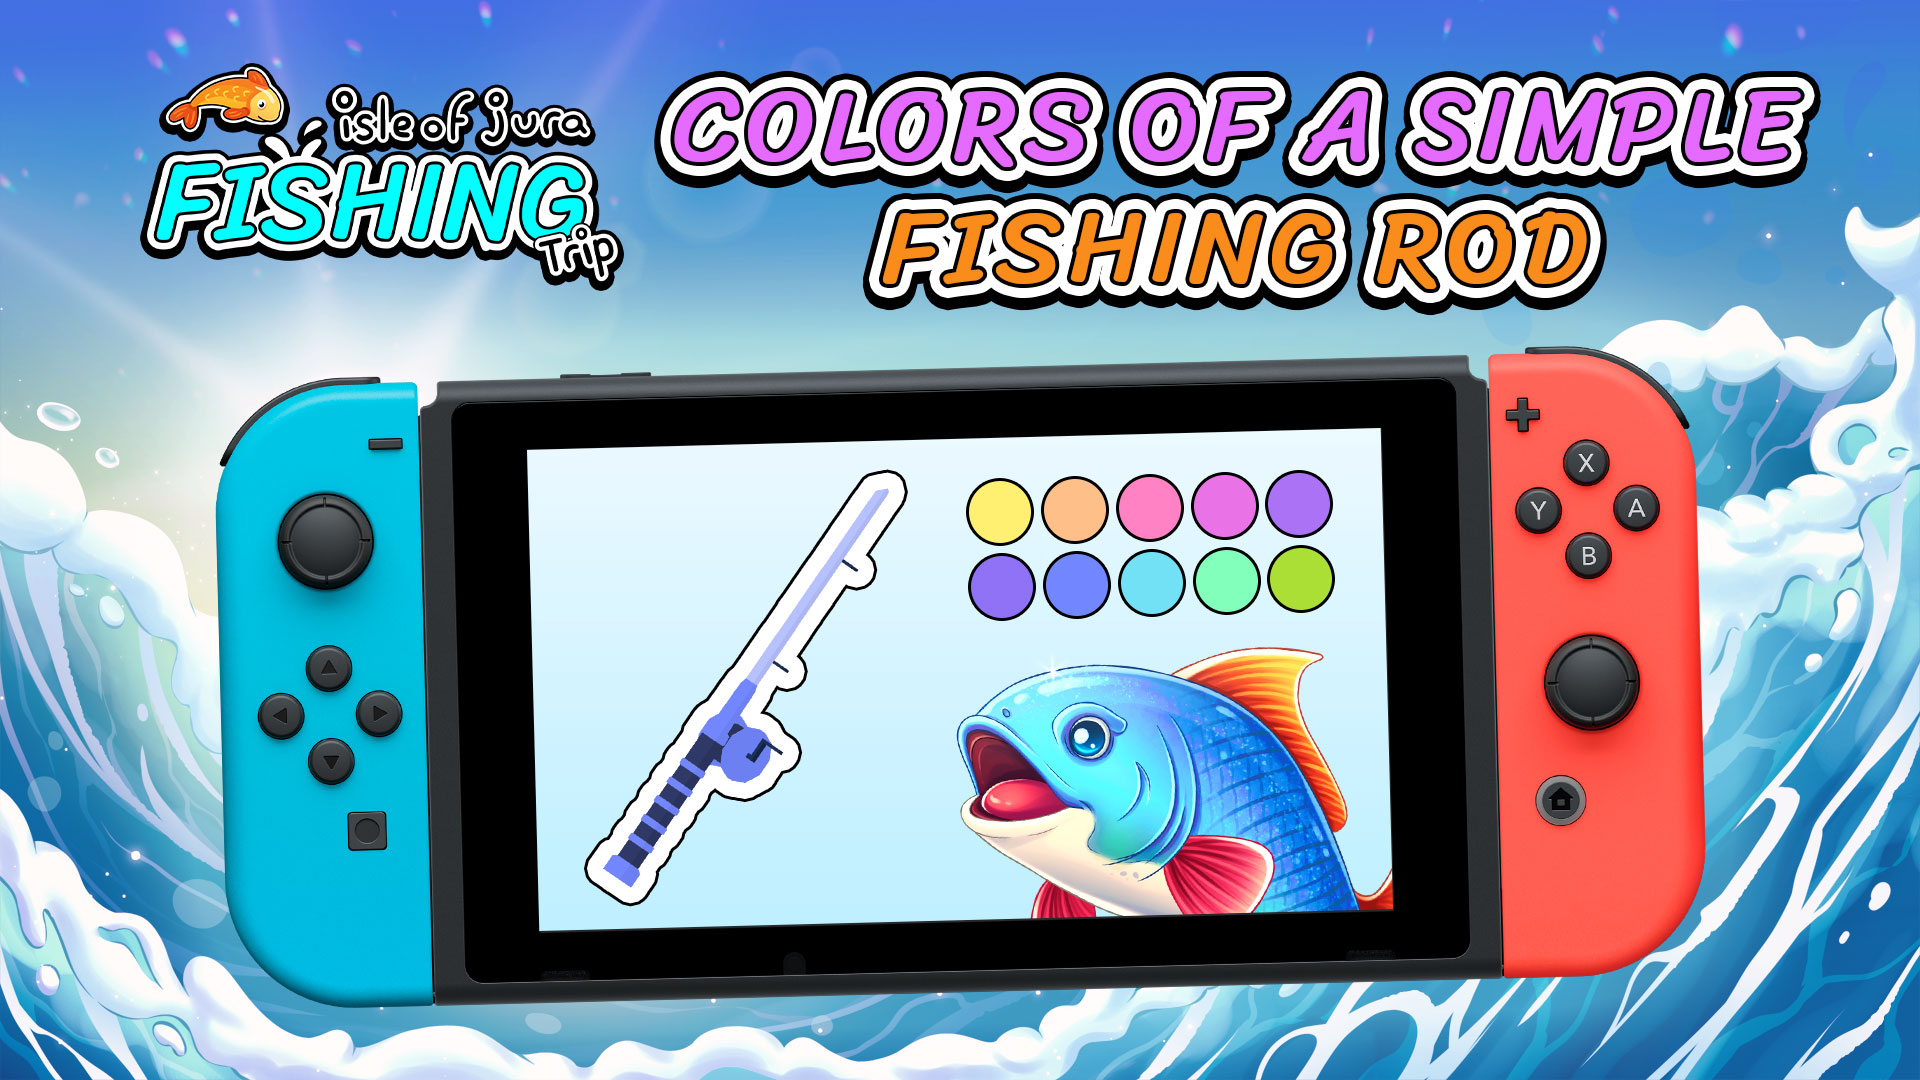 Colors of a simple fishing rod/Isle of Jura Fishing Trip/Nintendo